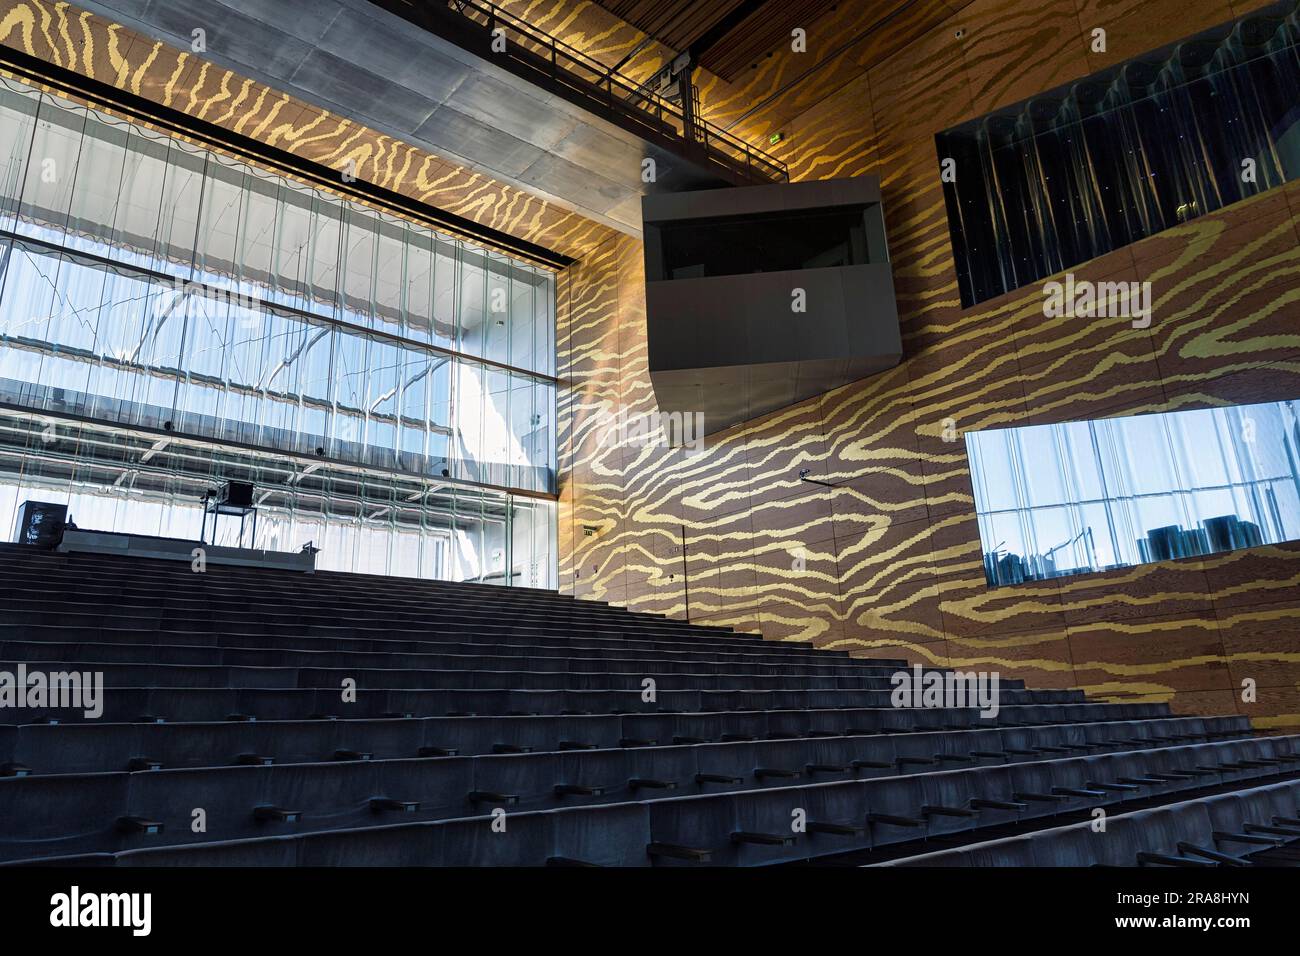 Sala Suggia concert hall, Casa da Musica concert hall, Casa da Musica, architect Rem Koolhaas and Ellen Van Loon, interior, modern architecture Stock Photo